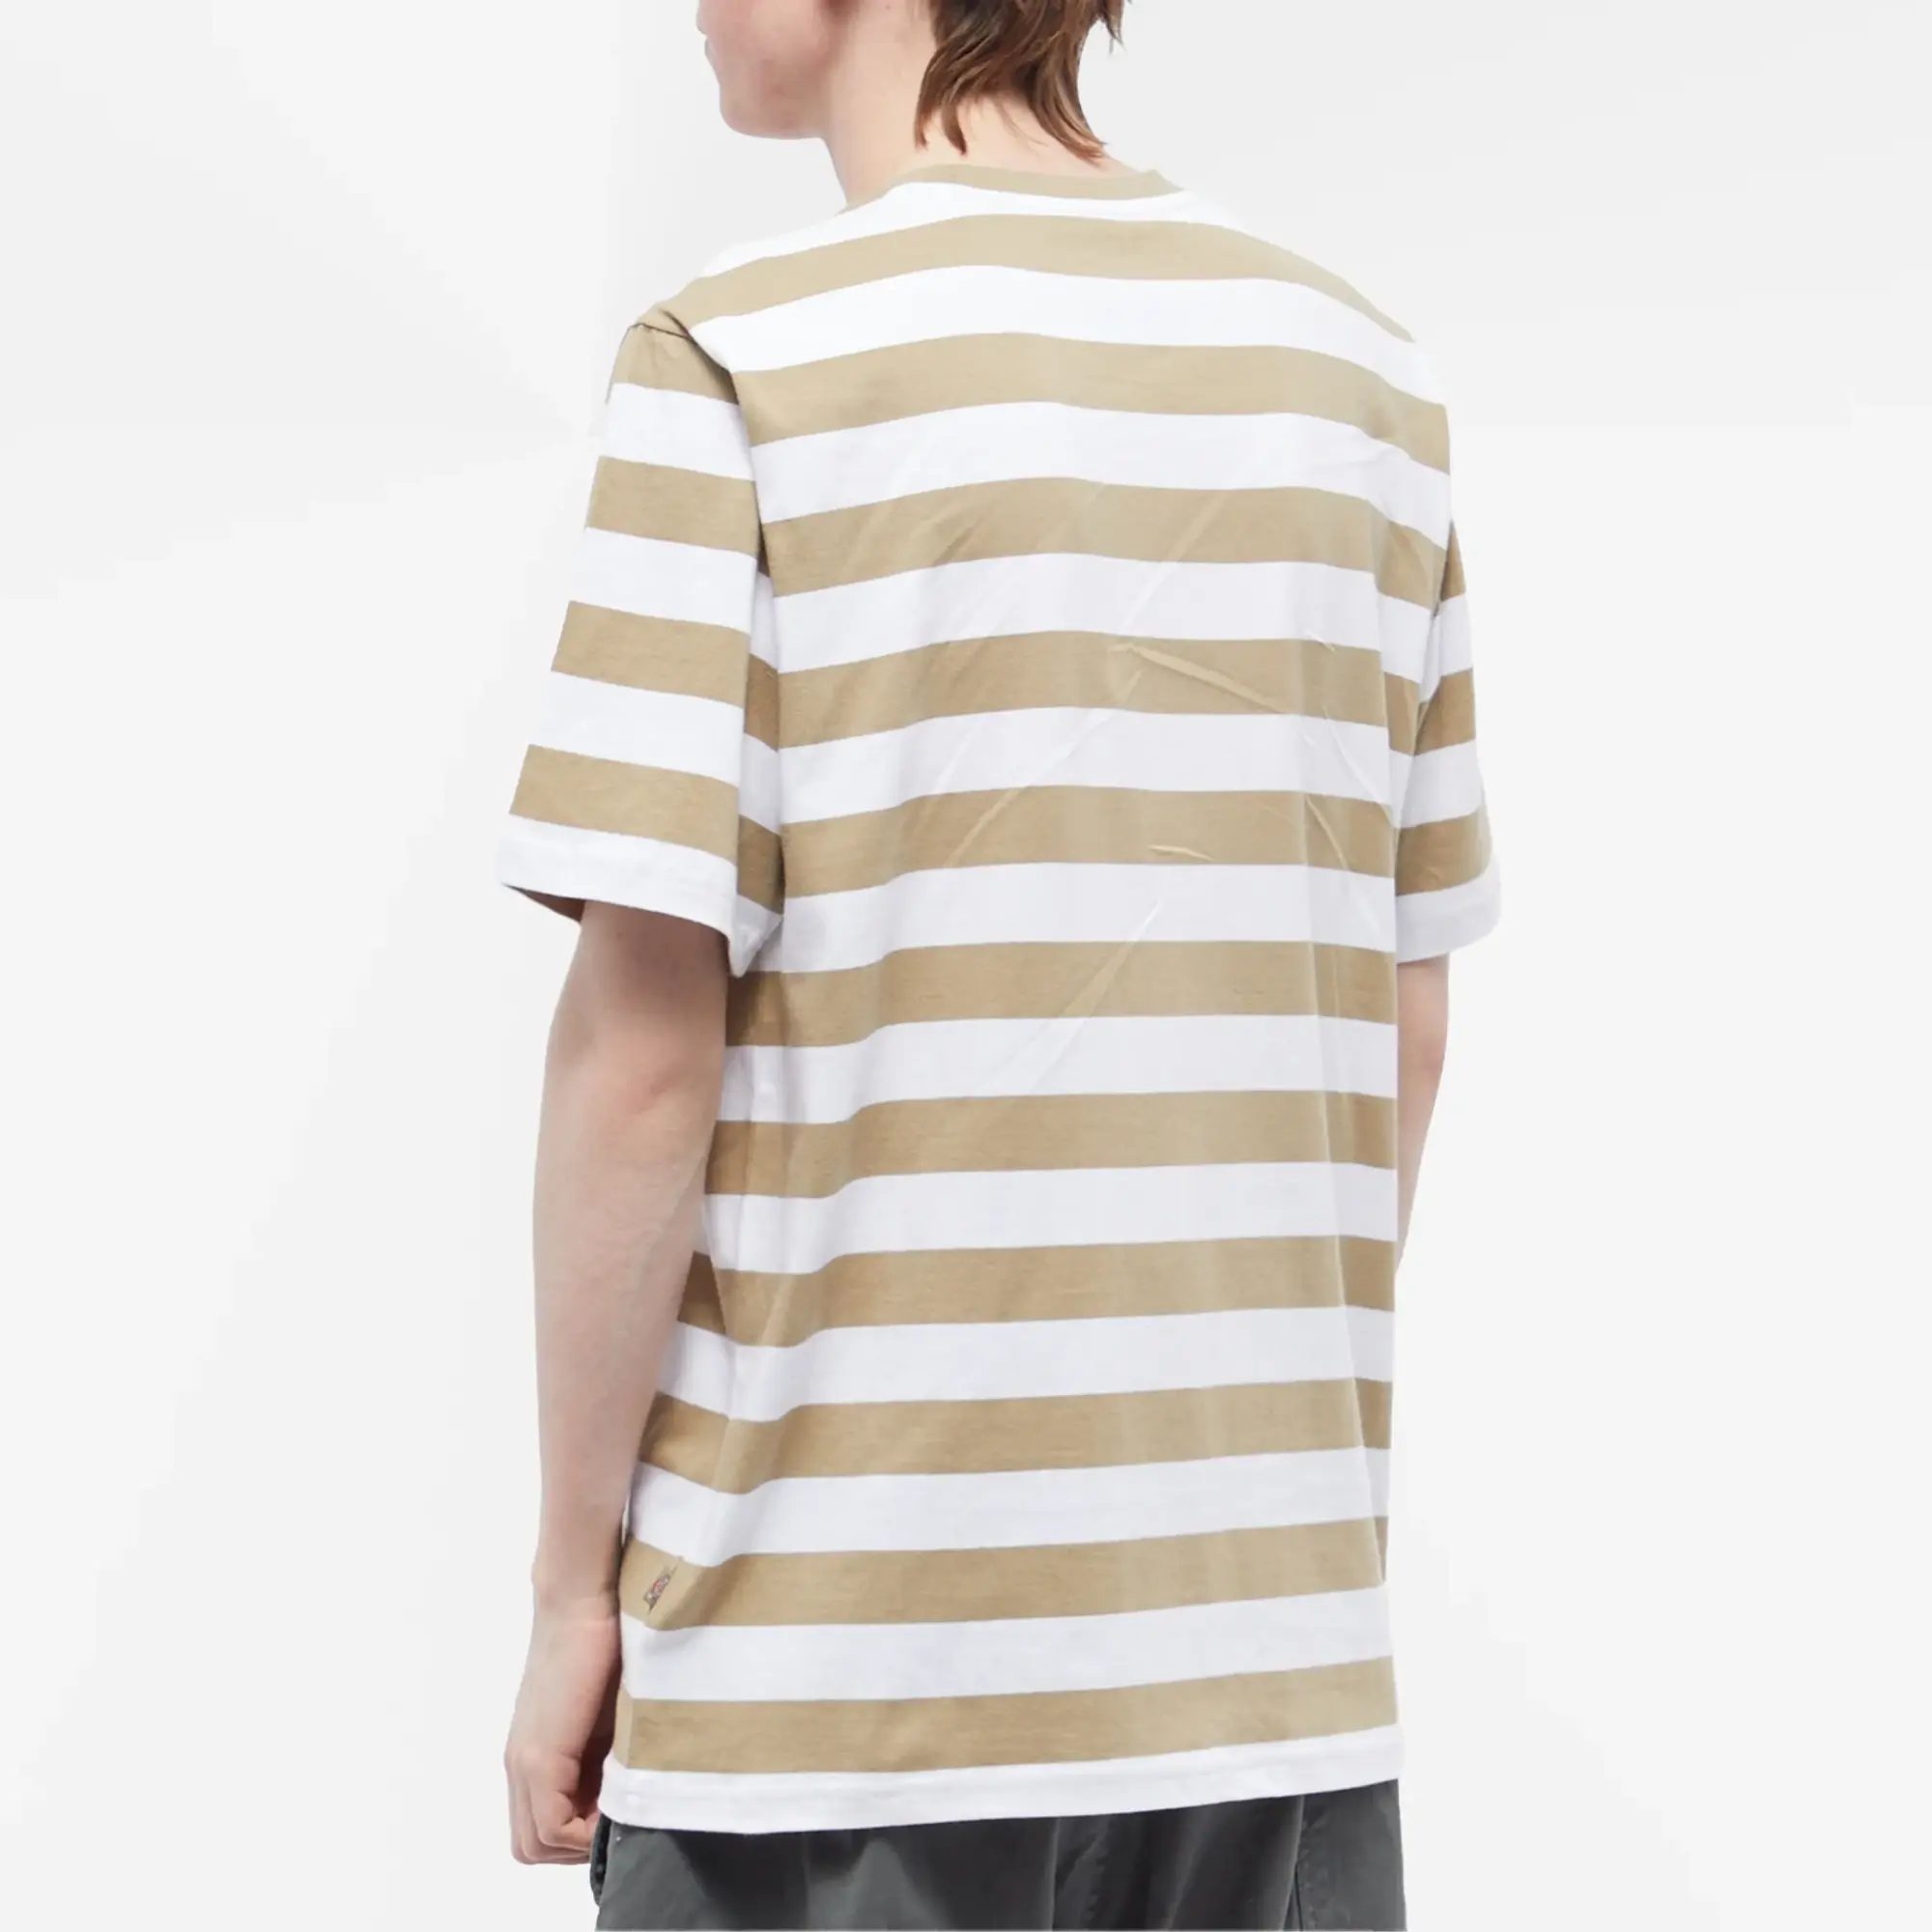 Dickies Men's Rivergrove Stripe T-Shirt Khaki